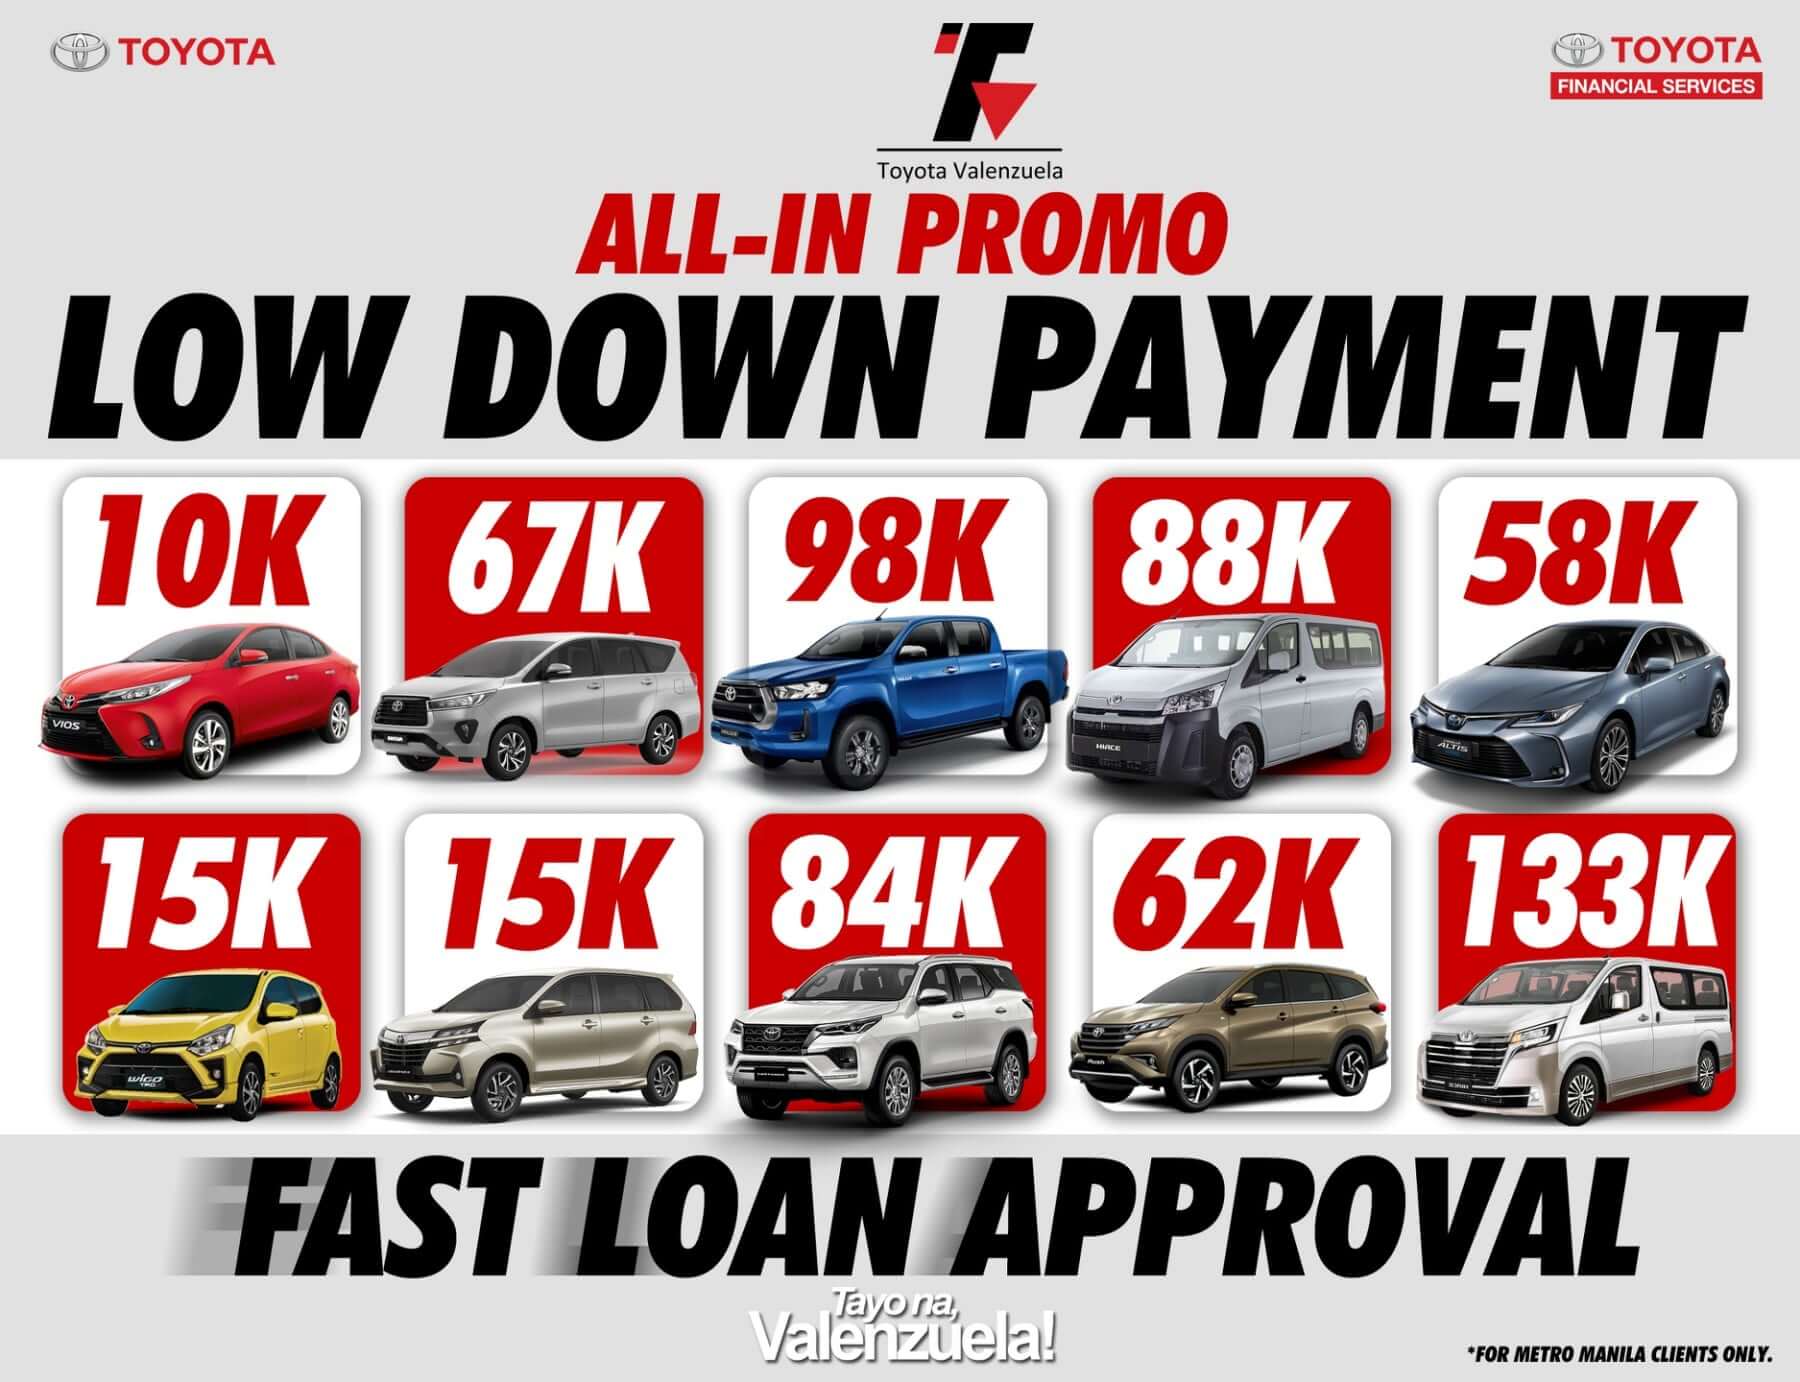 AllIn Promo Low Down Payment Toyota Valenzuela